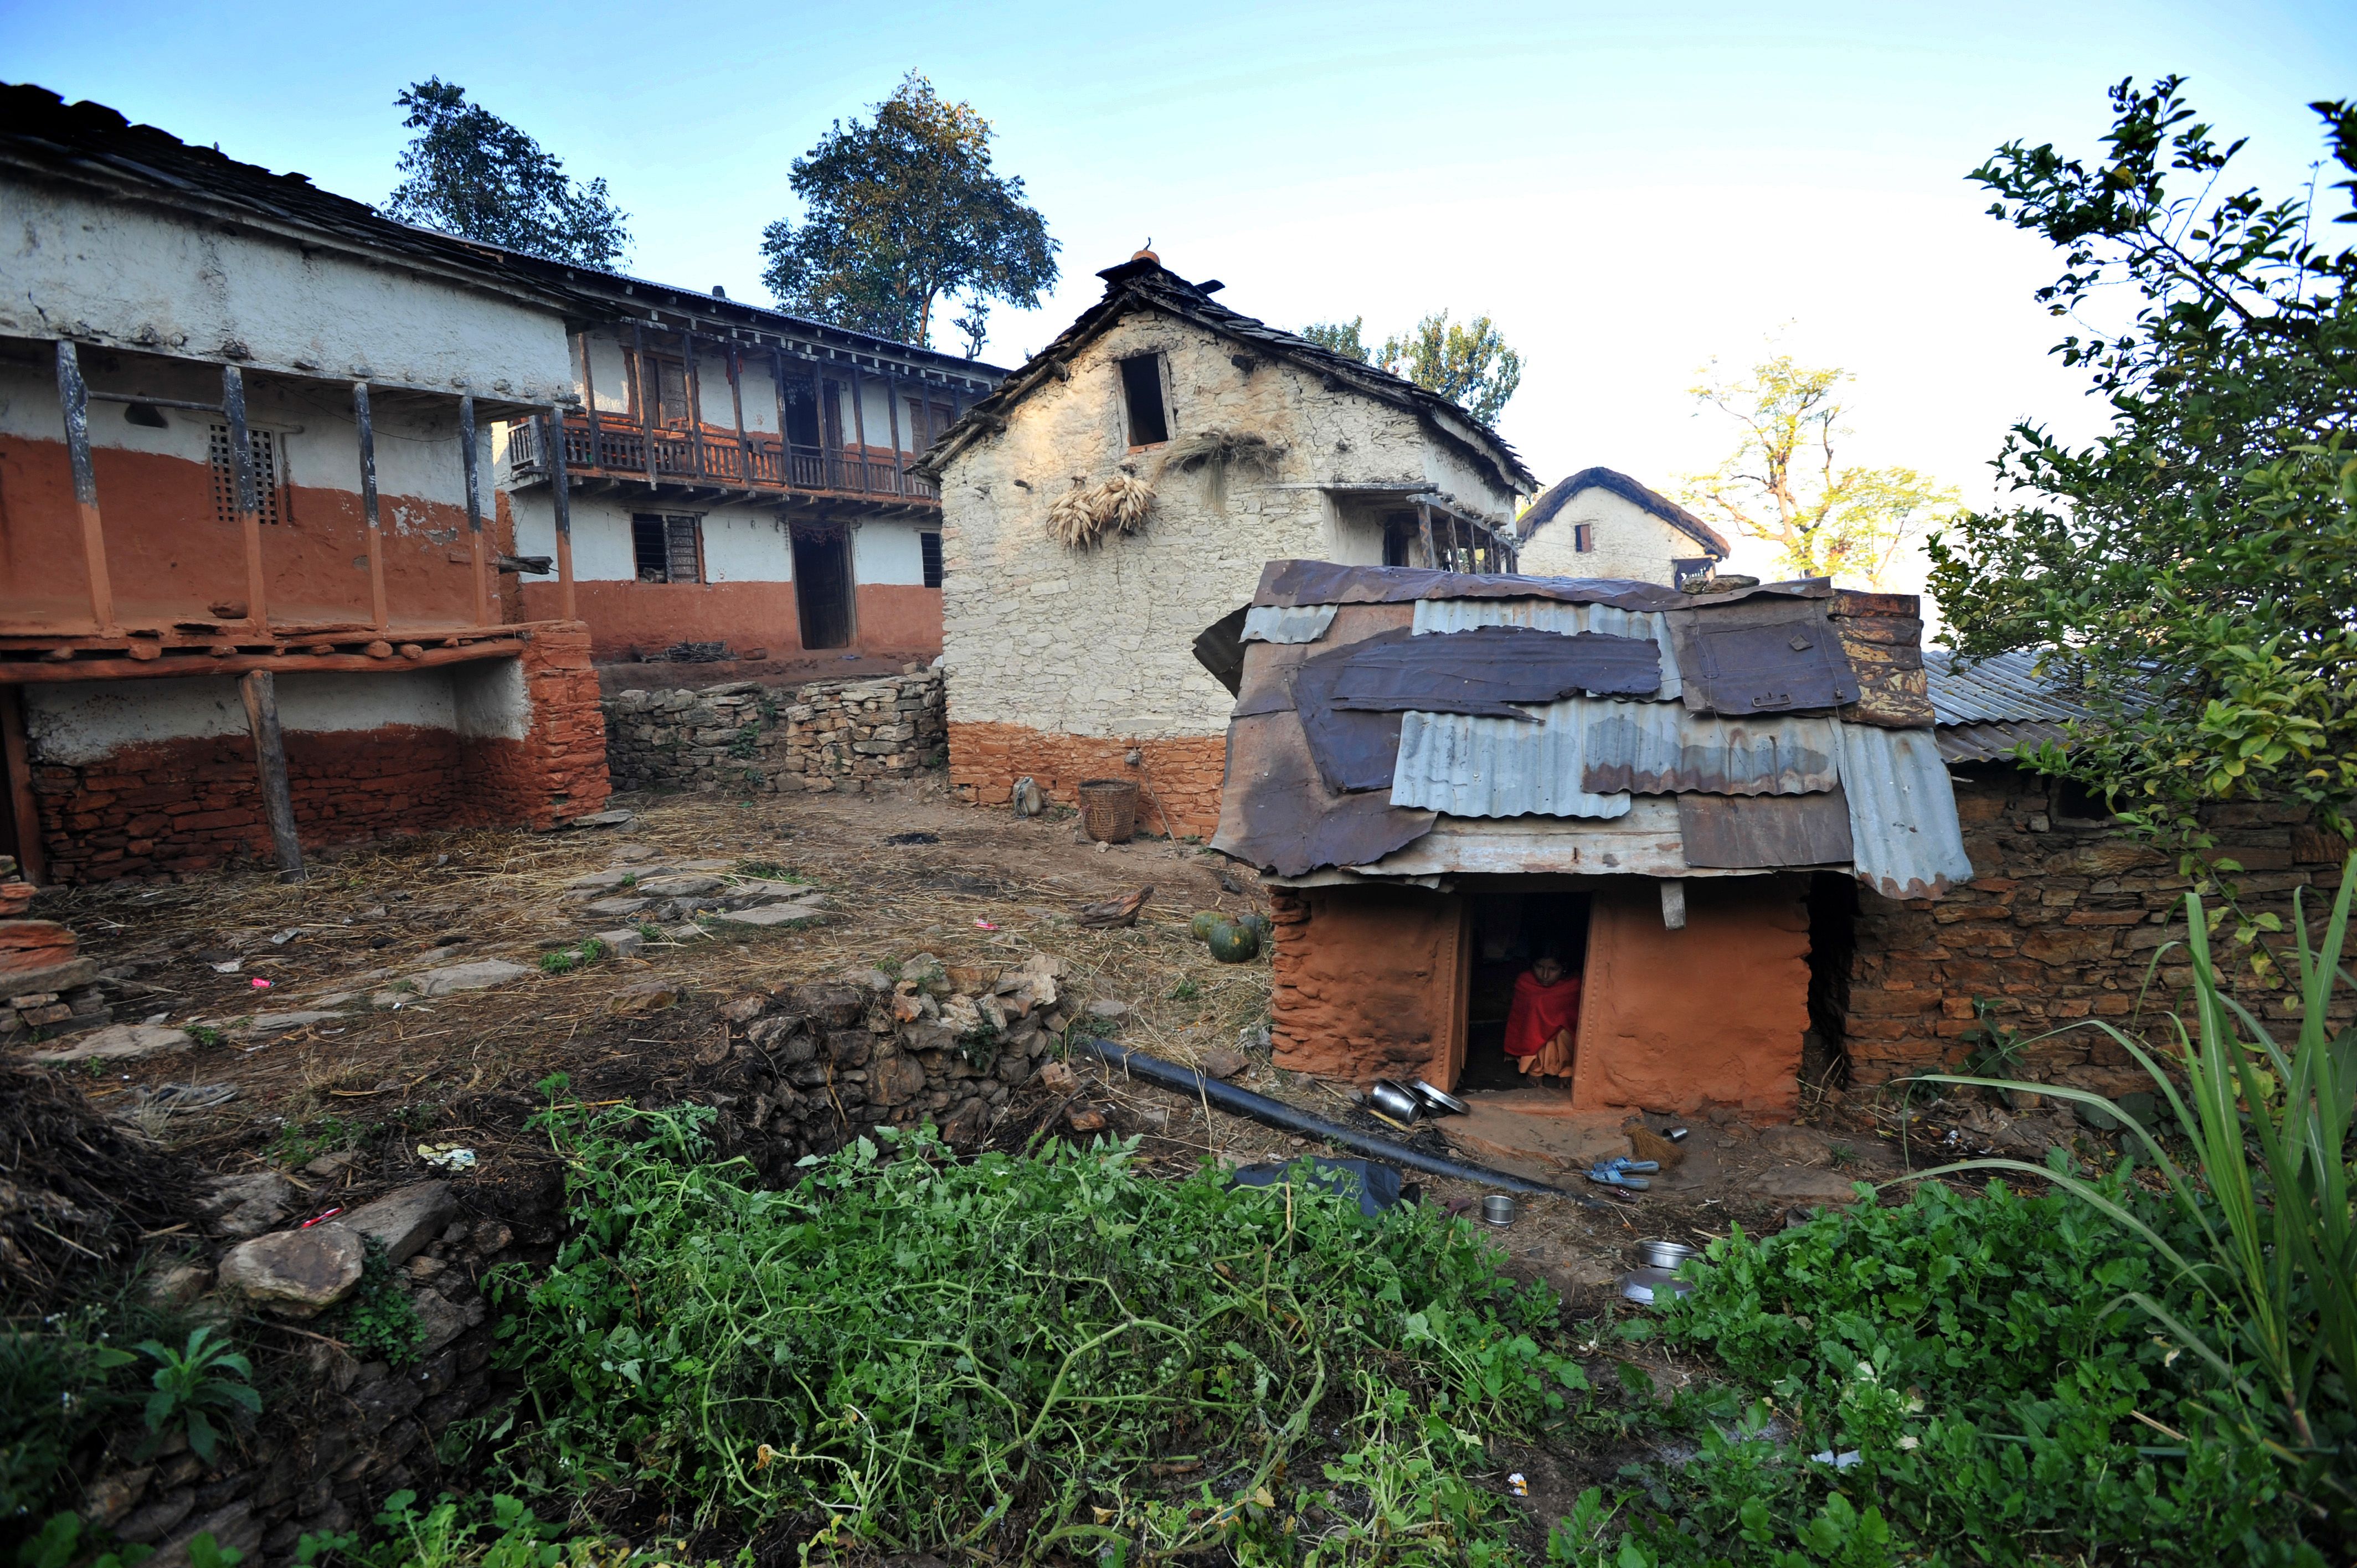 Sleeping Sali Sex - Nepal girls sleep in 'menstruation huts' despite ban, study finds | CNN